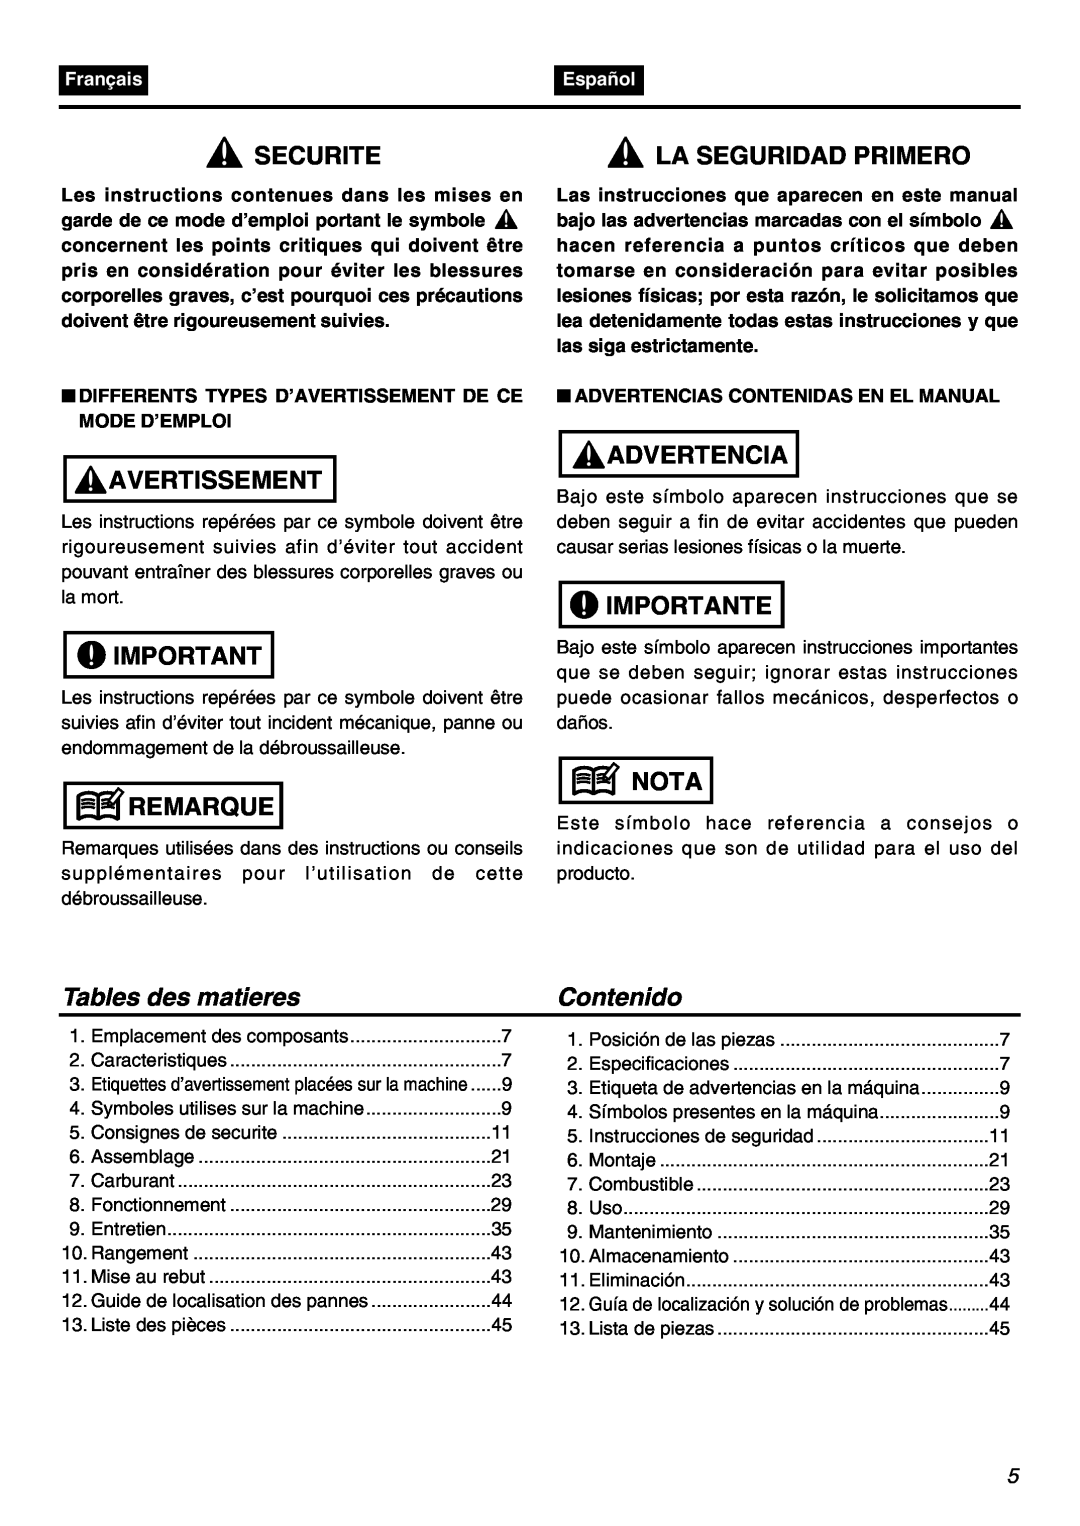 Univex SRTZ2401-CA manual Securite, Avertissement, Remarque, Advertencia, Importante, Nota, Tables des matieres, Contenido 